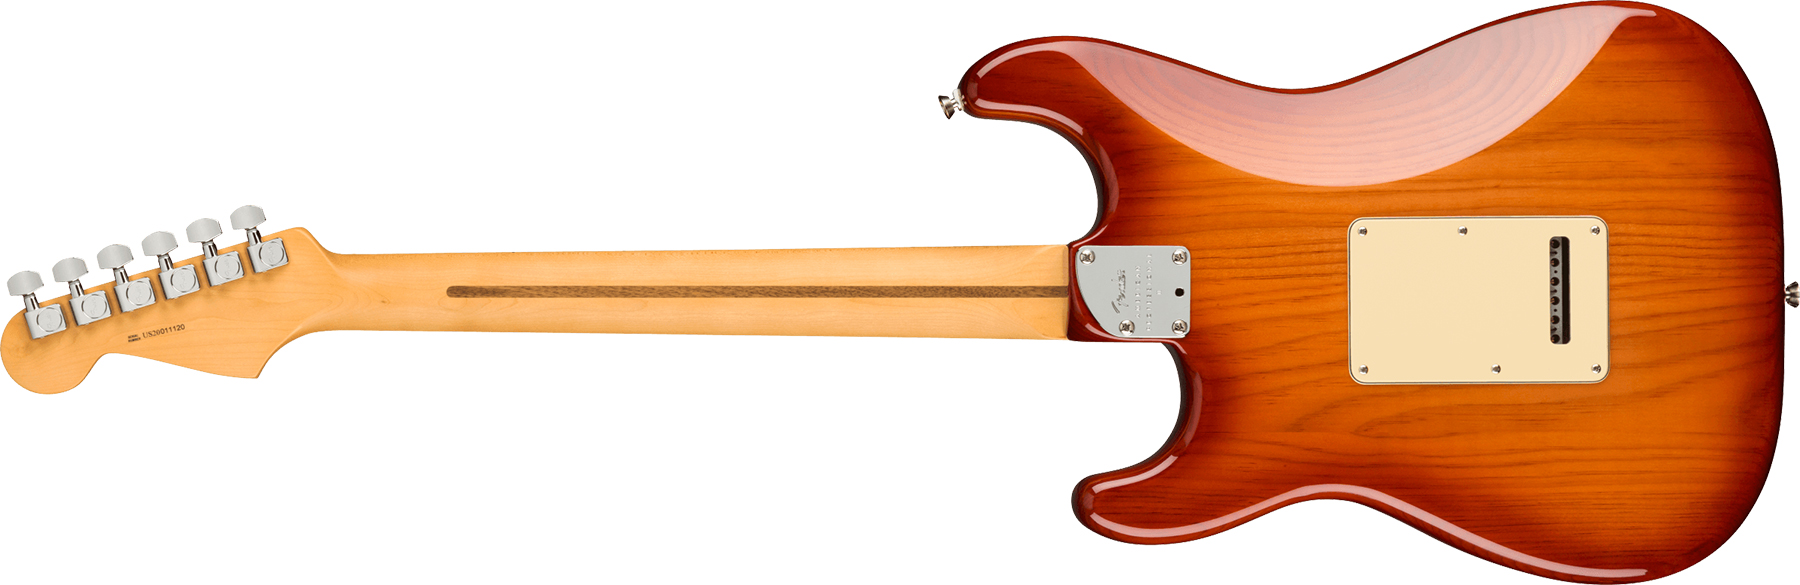 Fender Strat American Professional Ii Hss Usa Mn - Sienna Sunburst - Str shape electric guitar - Variation 1